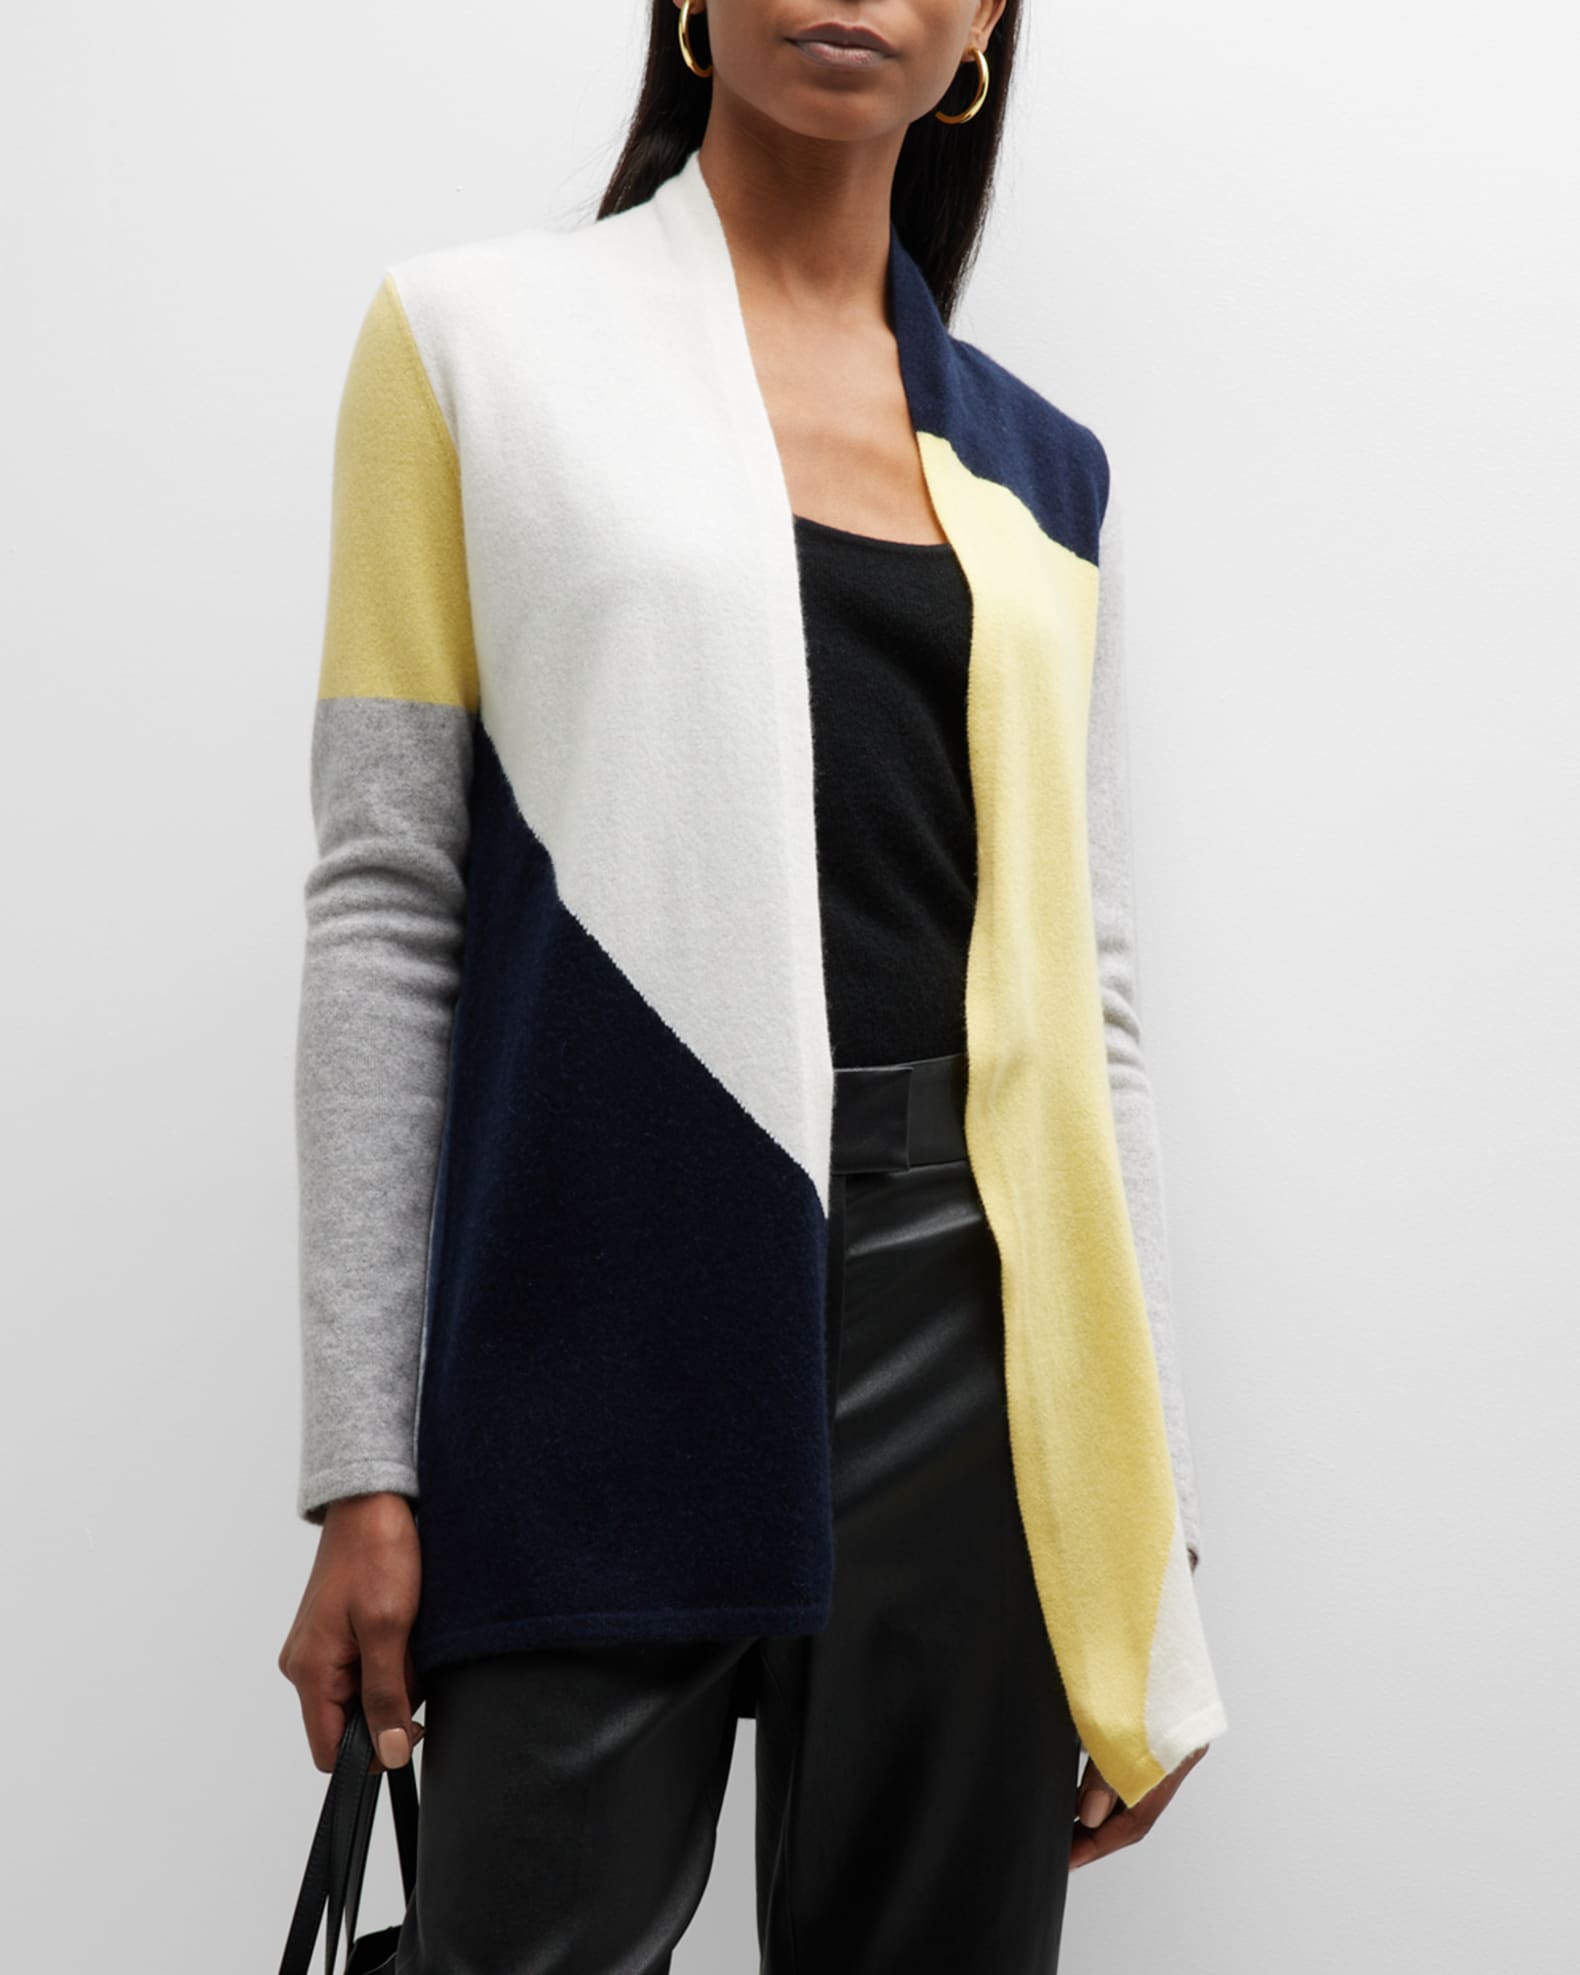 Louis Vuitton Men's Yellow & Gray Wool Cashmere Color Block Sweater size M